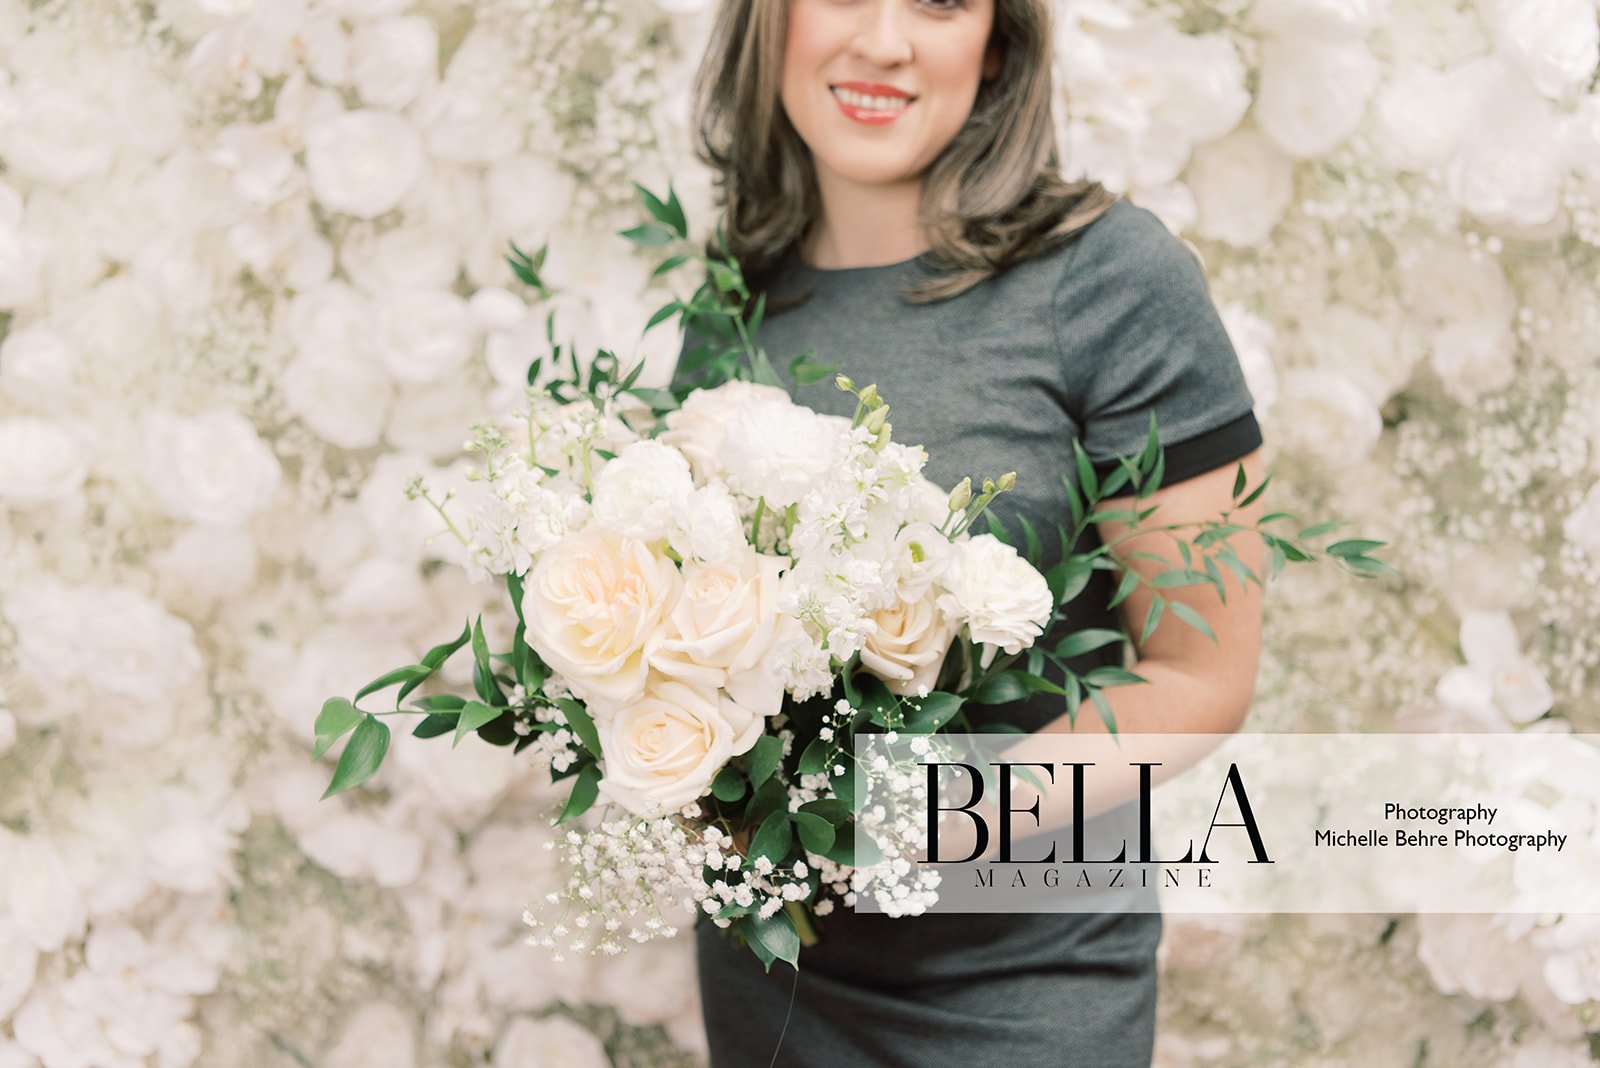 Michelle-Behre-Photography-BELLA-Magazine-Wedding-Event-La-Pulperia-New-York-7.jpg